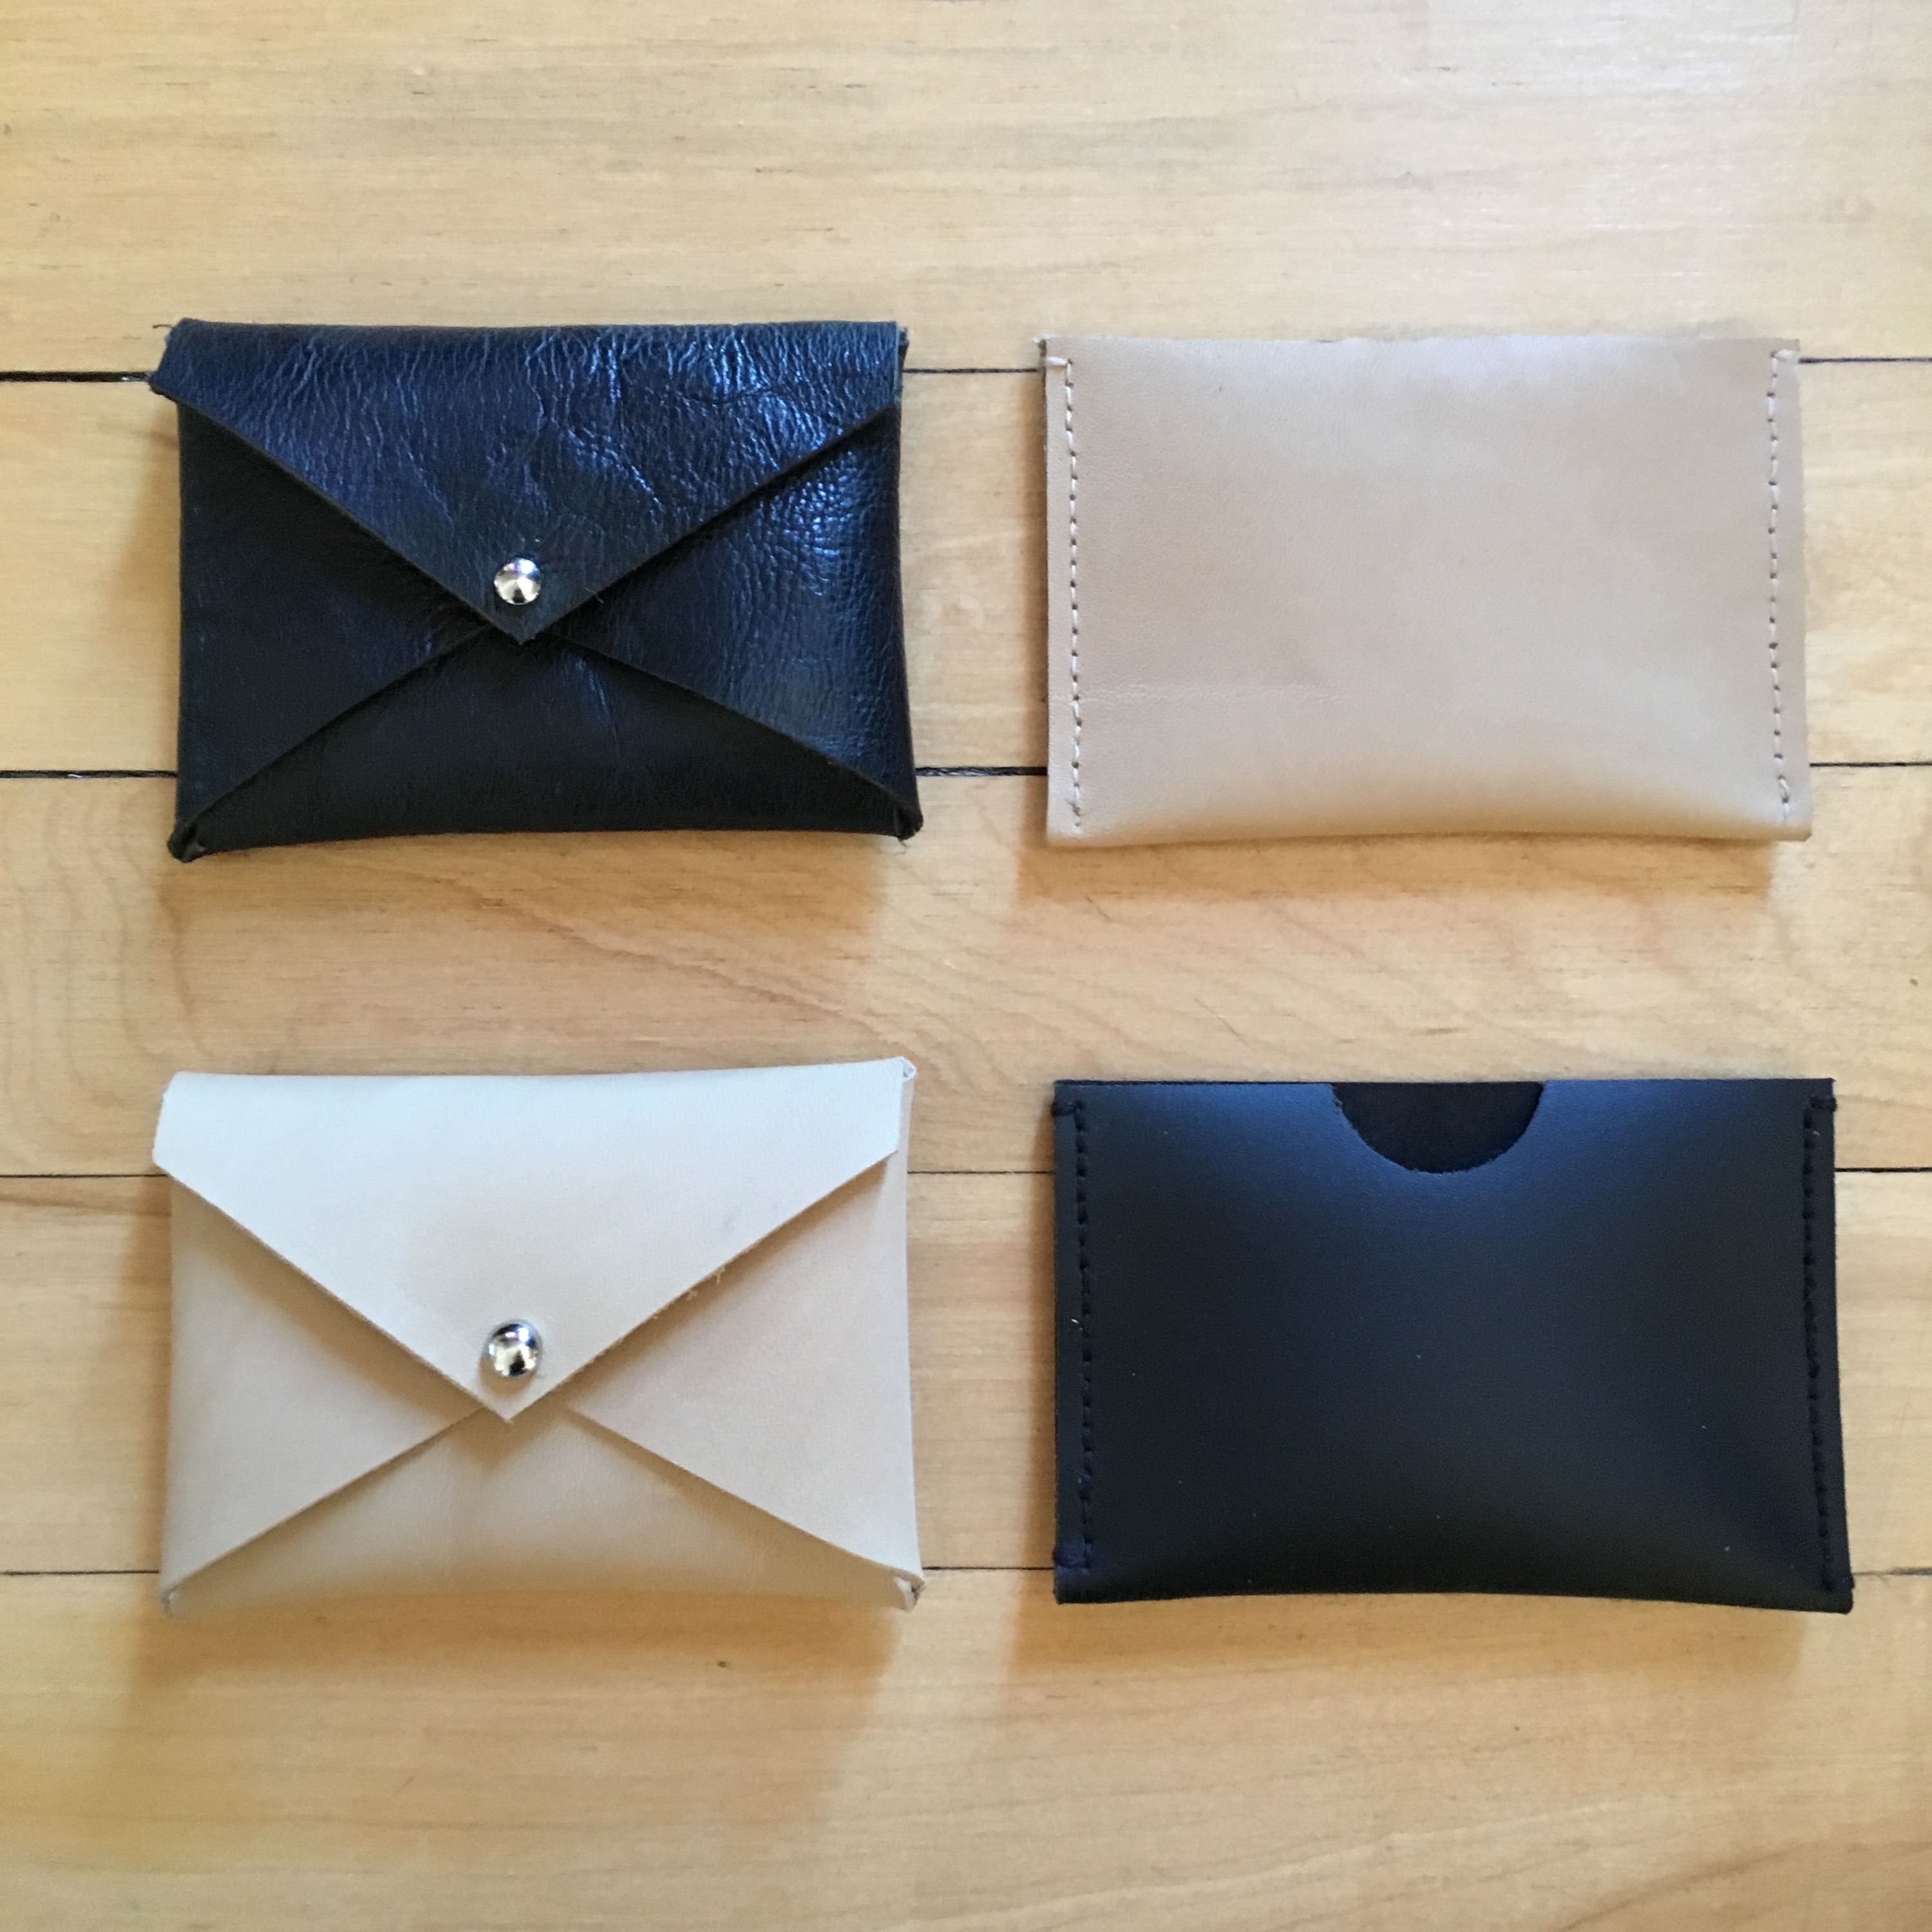 DIY Card Holder - Fabric Card Holder Tutorial | TREASURIE